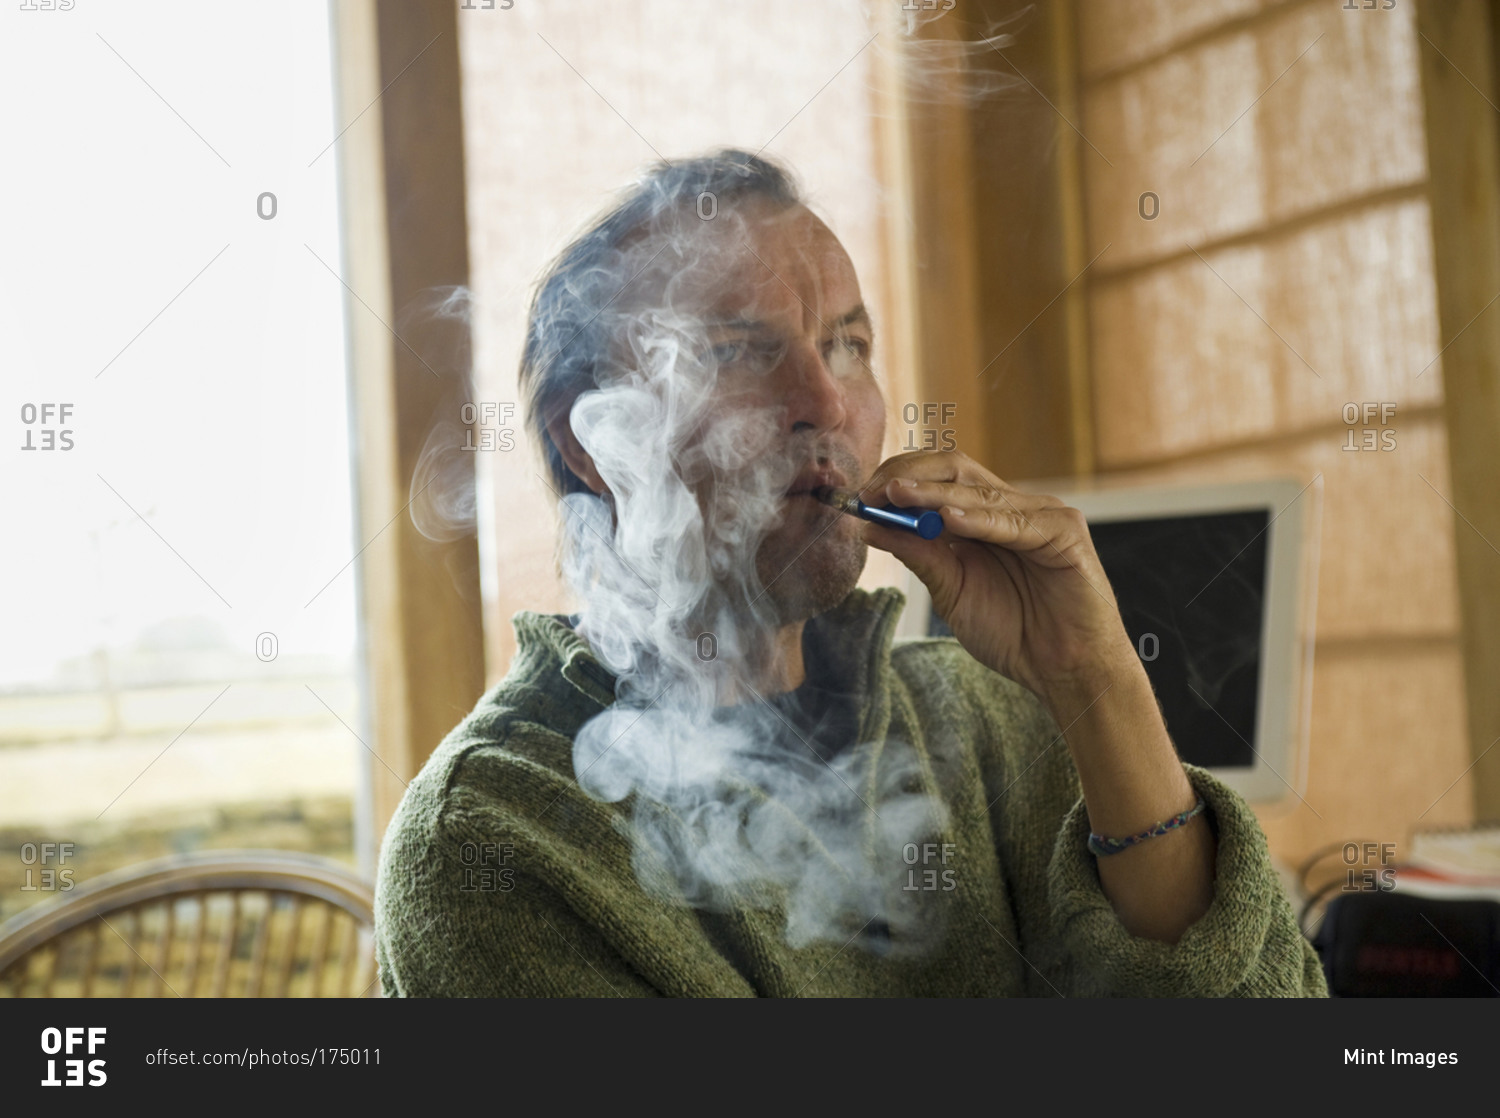 A man using an electronic cigarette